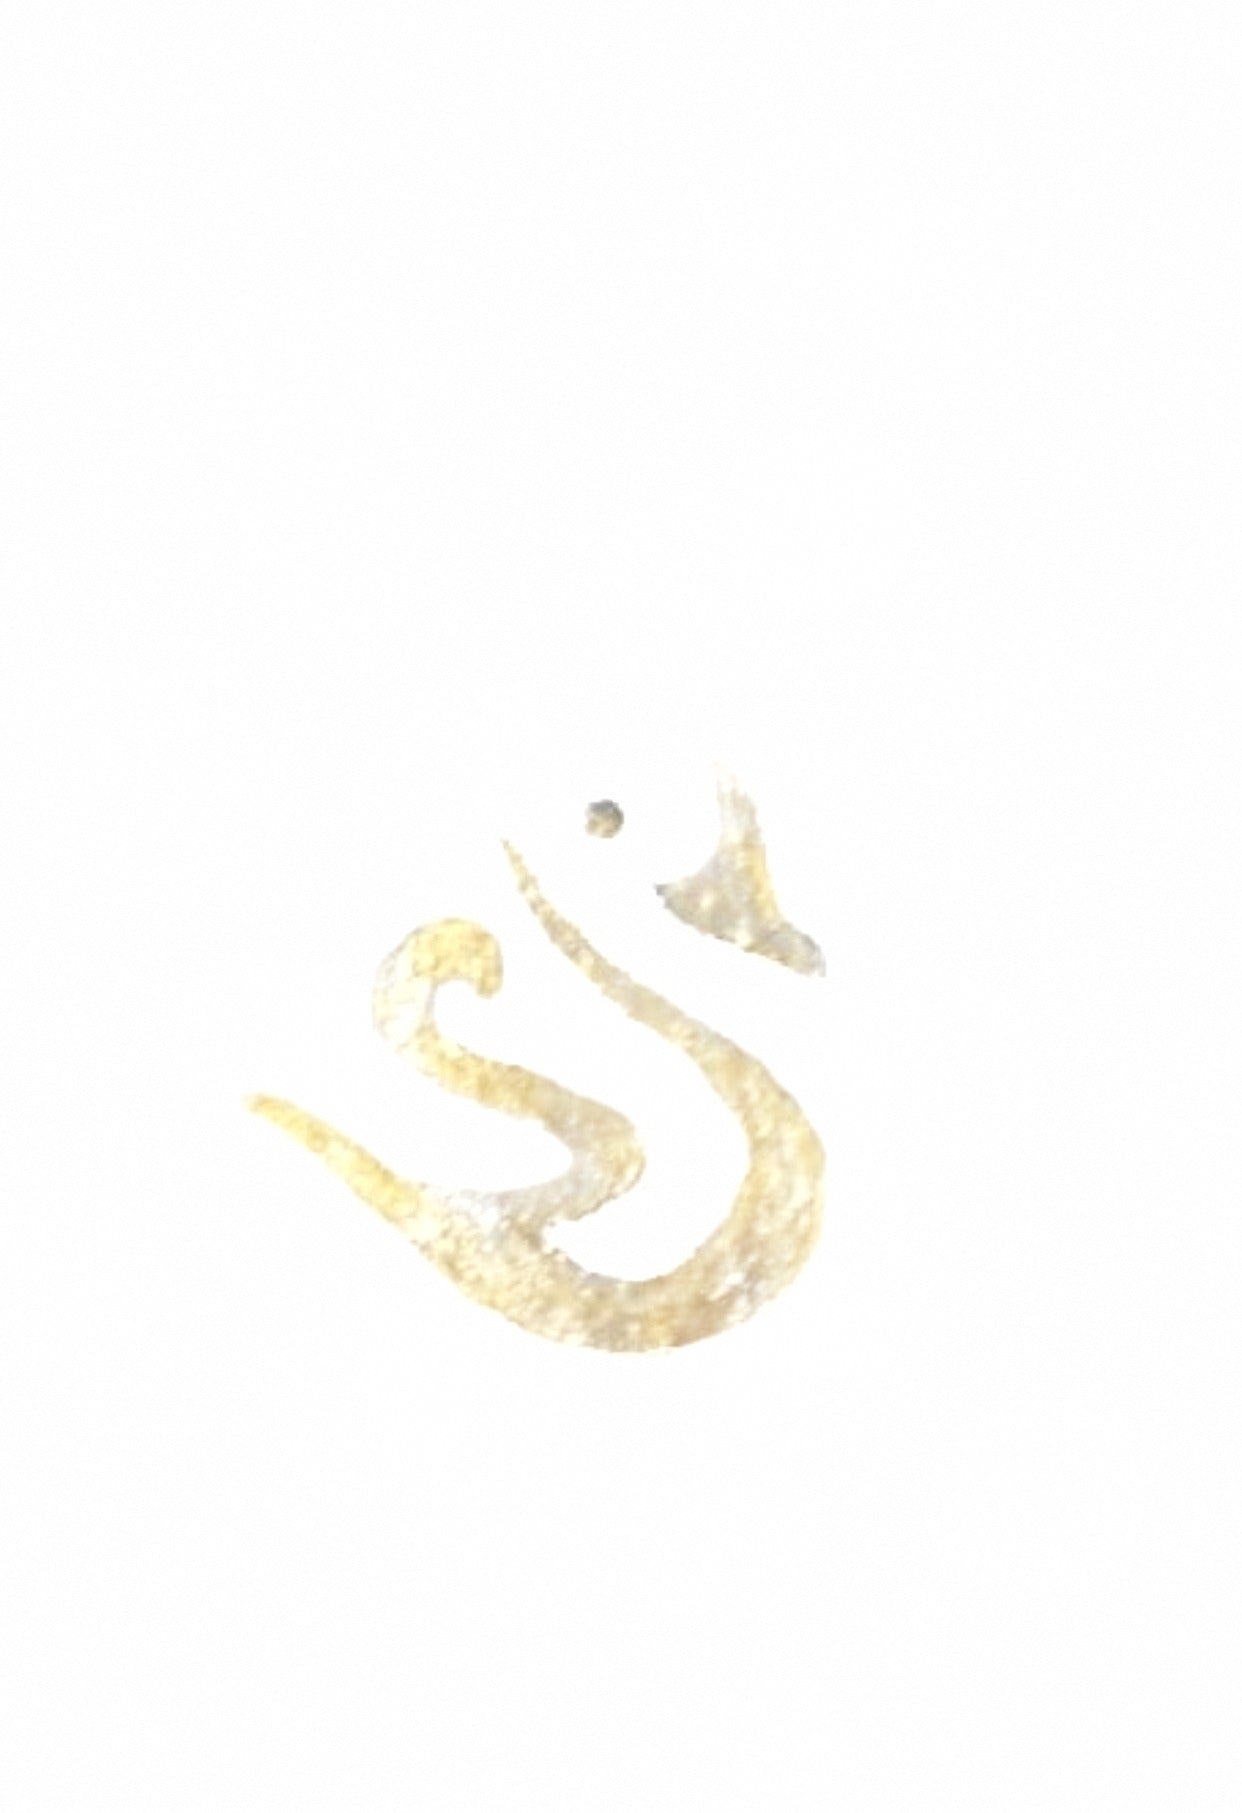 Logo of Sisu